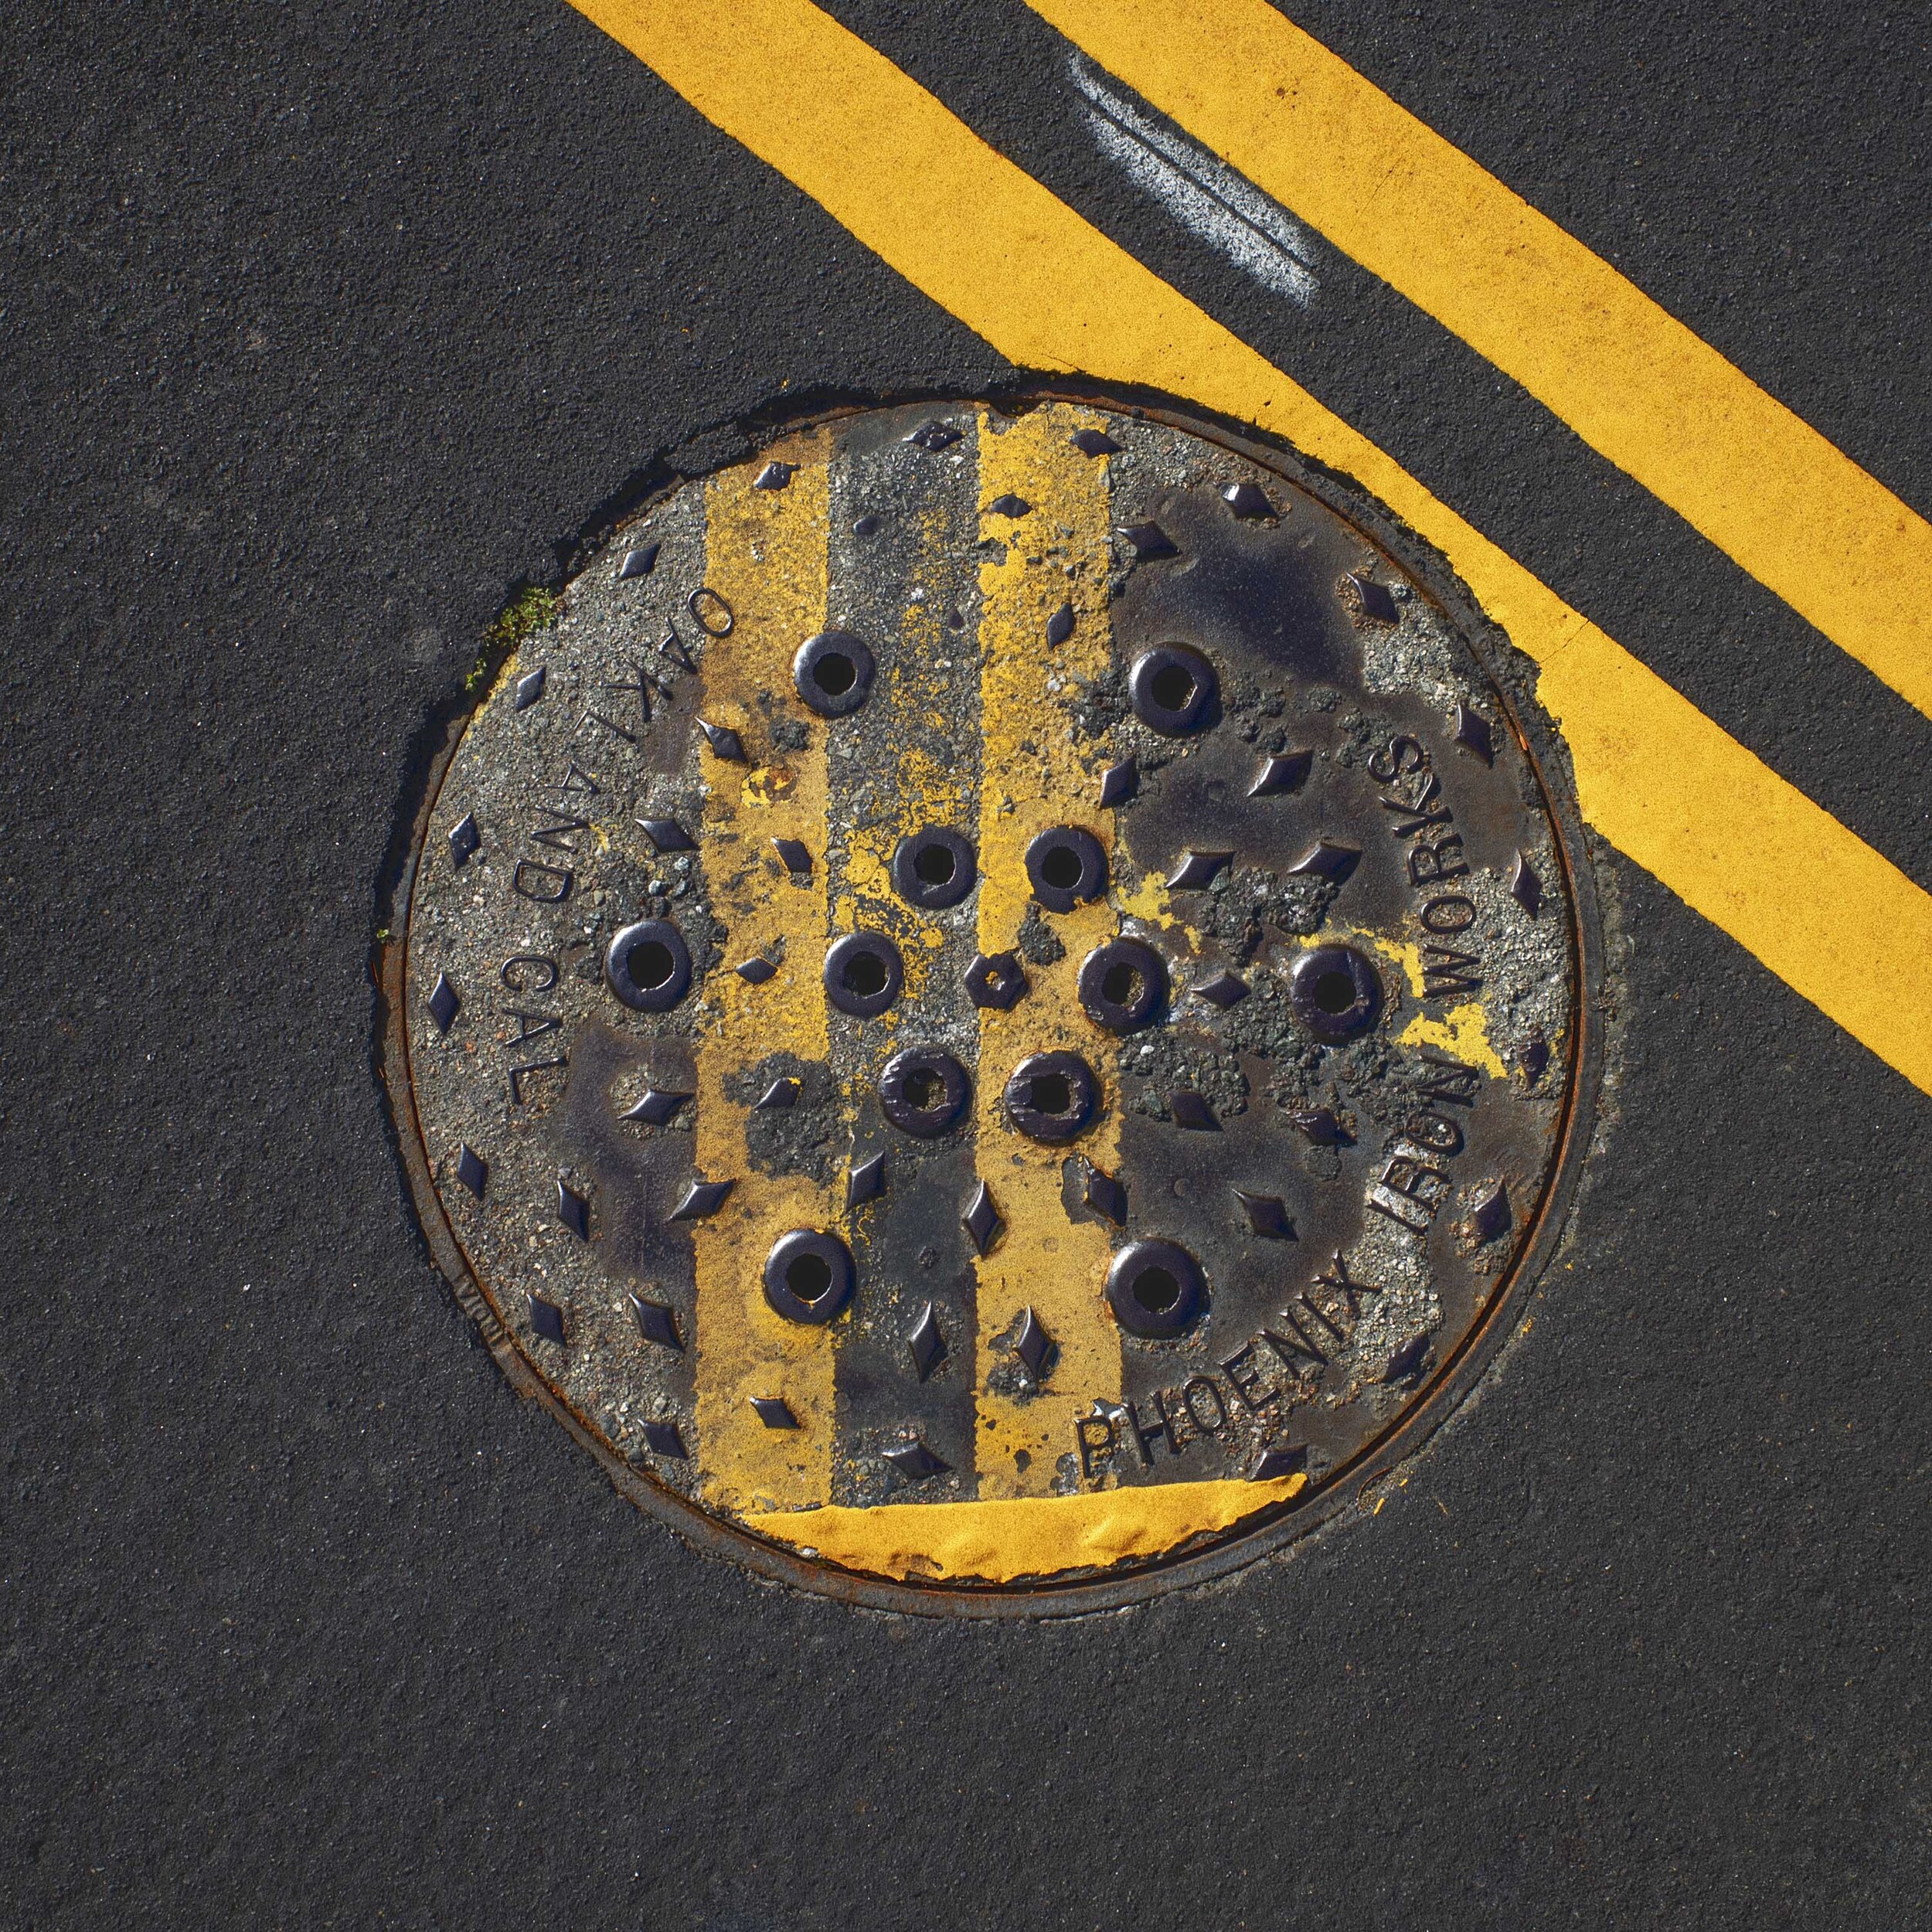 Manhole #2